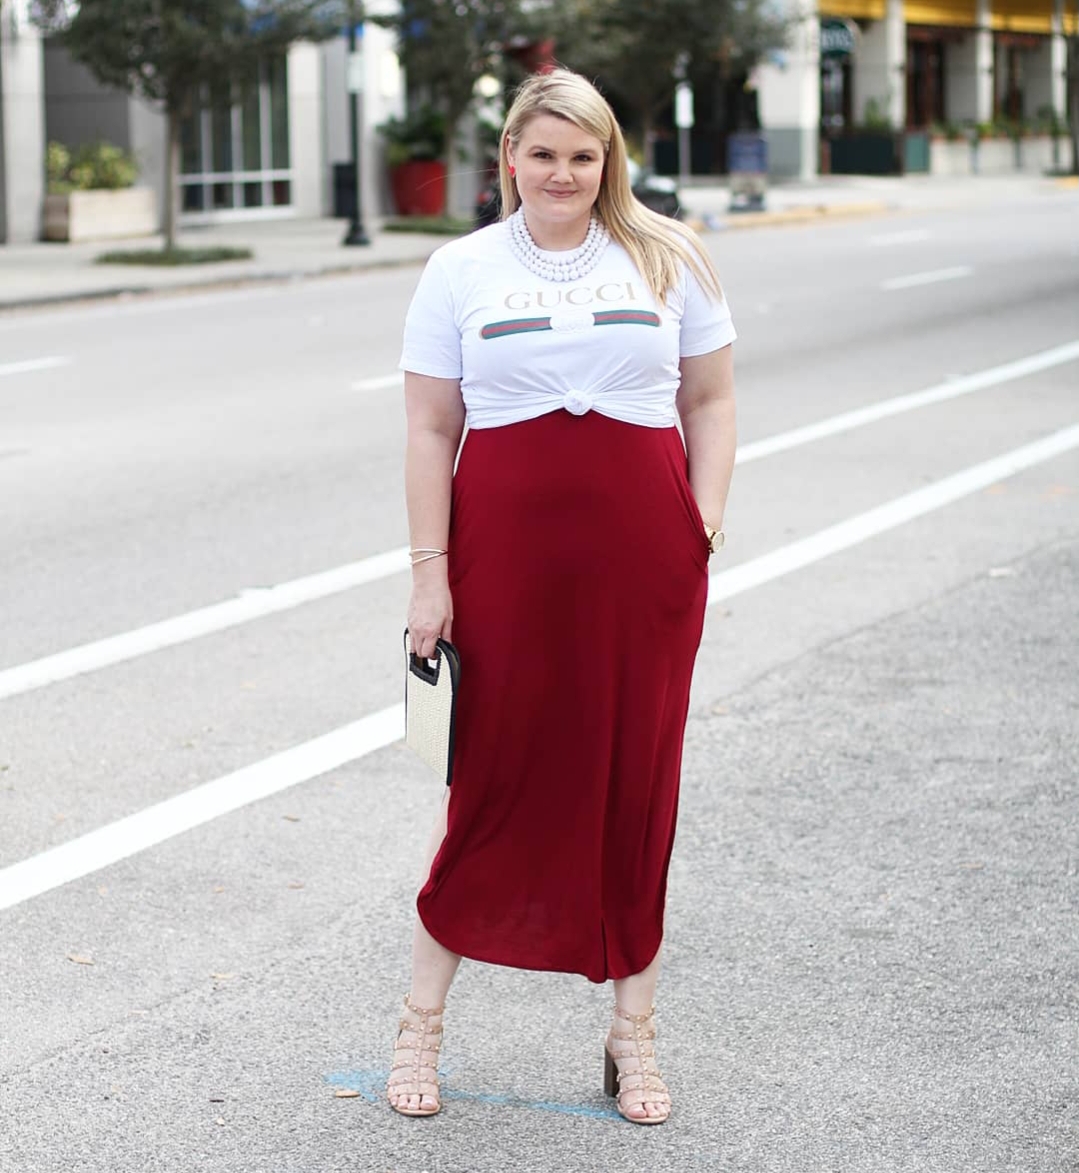 Orlando Fashion Blogger Emily of Fabulously Overdressed shares 5 ways to style a graphic tee